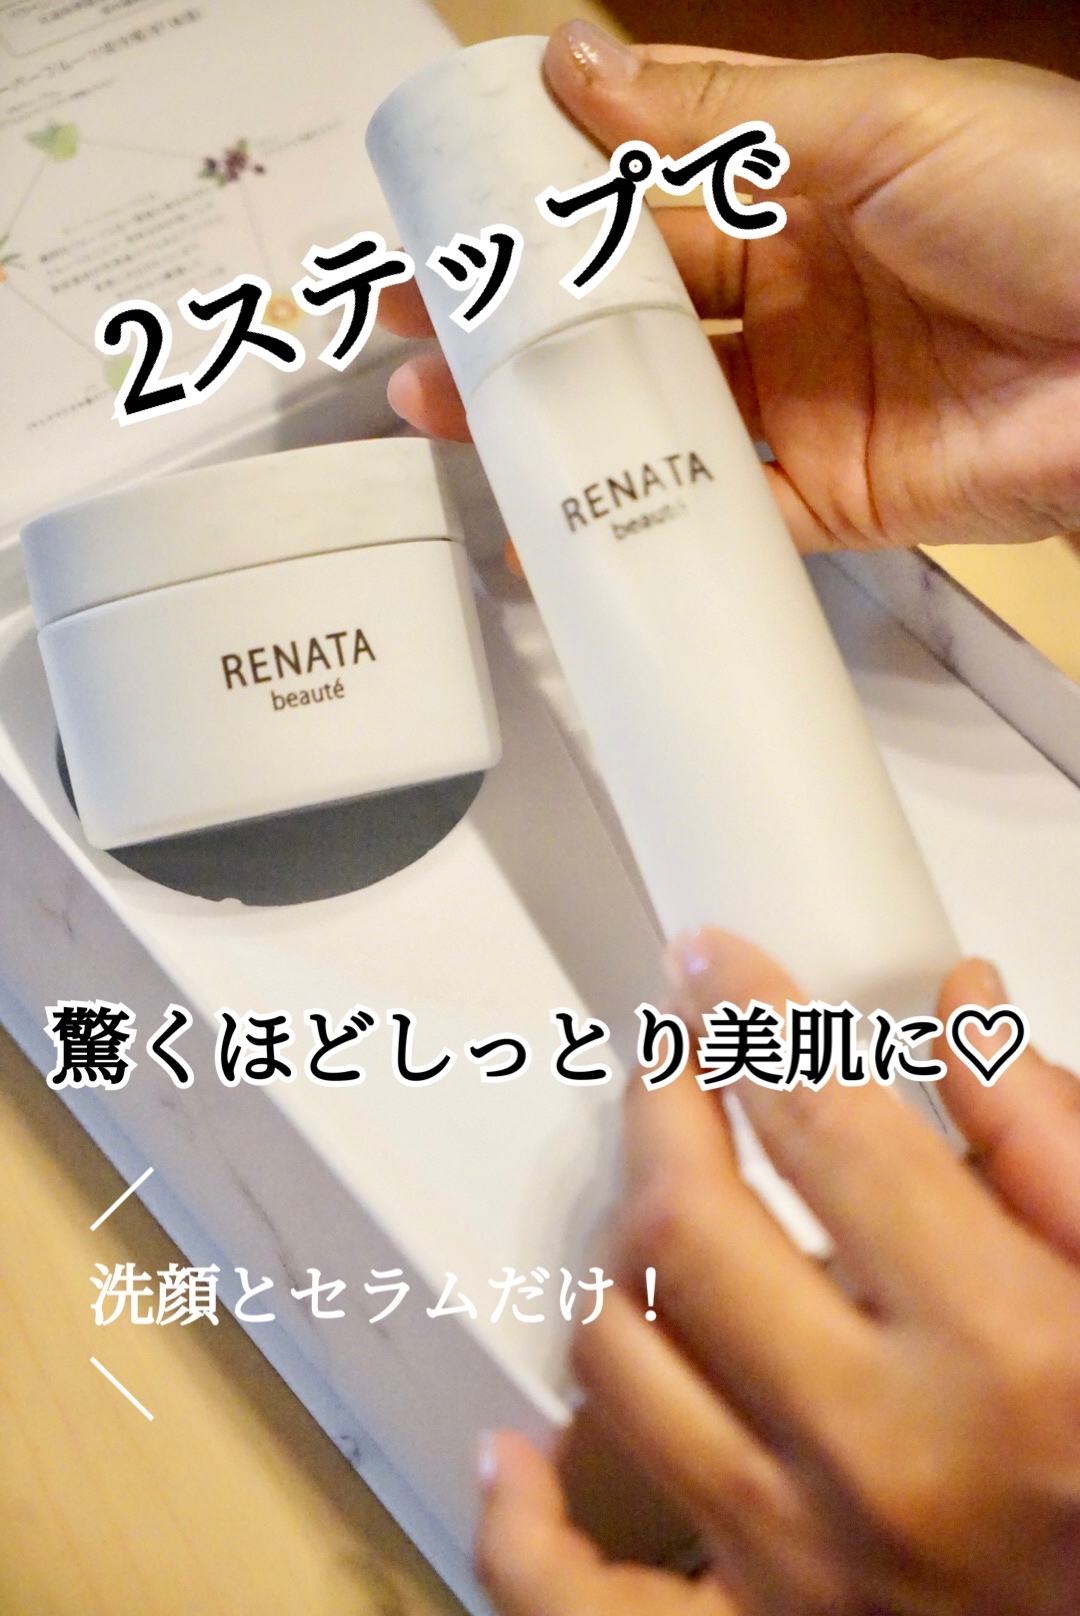 RENATA beauté(レナータ ボーテ) スキンケアセットの良い点・メリットに関するmanichikoさんの口コミ画像1